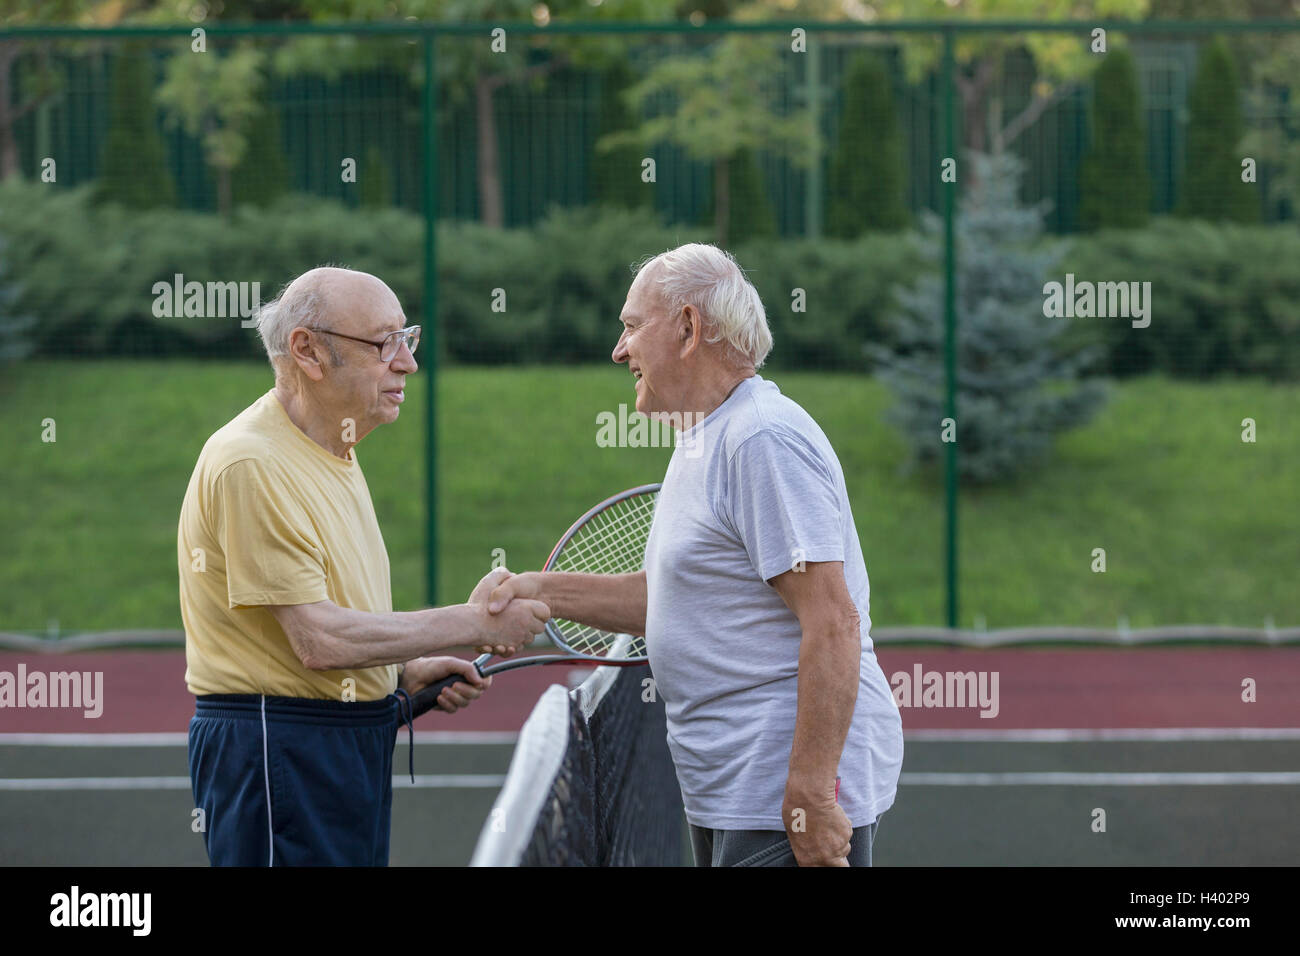 Senior friends shaking hands over net at tennis court Stock Photo